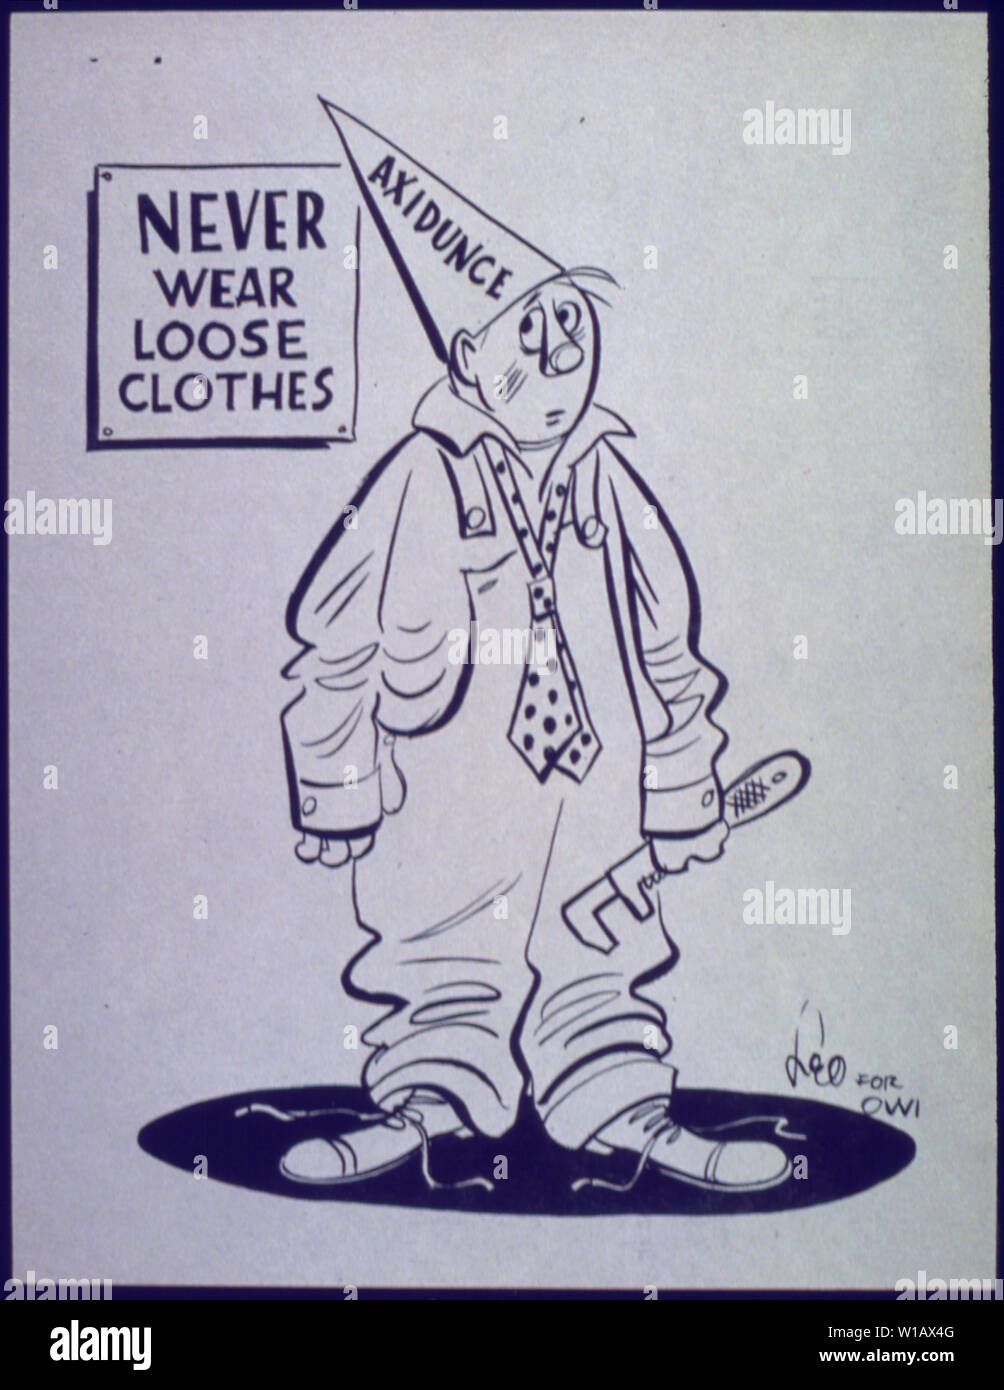 Axidunce cartoon - Never wear loose clothes Stock Photo - Alamy